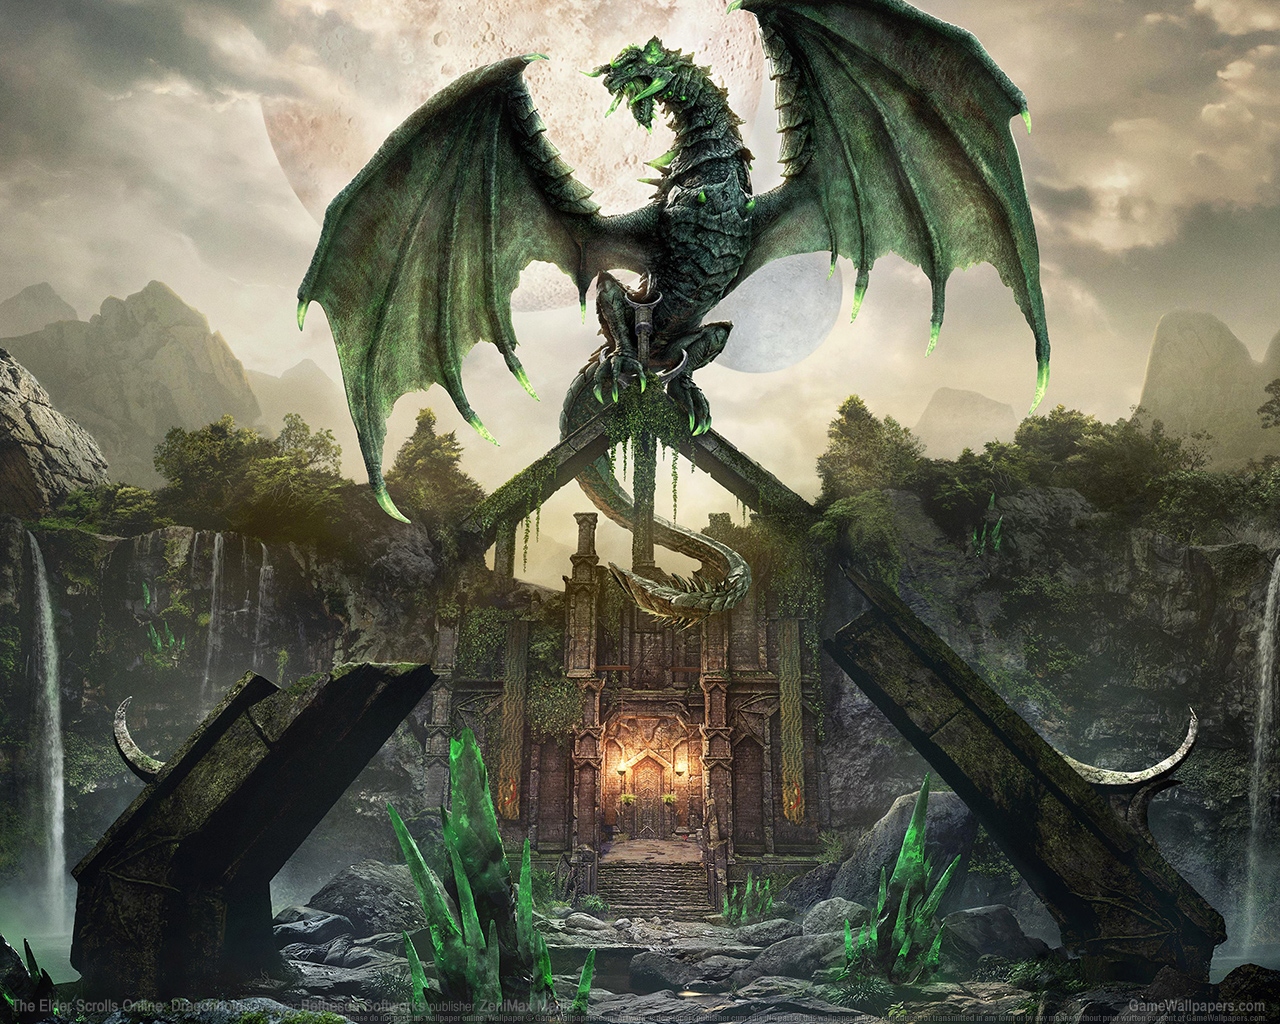 The Elder Scrolls Online: Dragonhold 1280 wallpaper or background 01